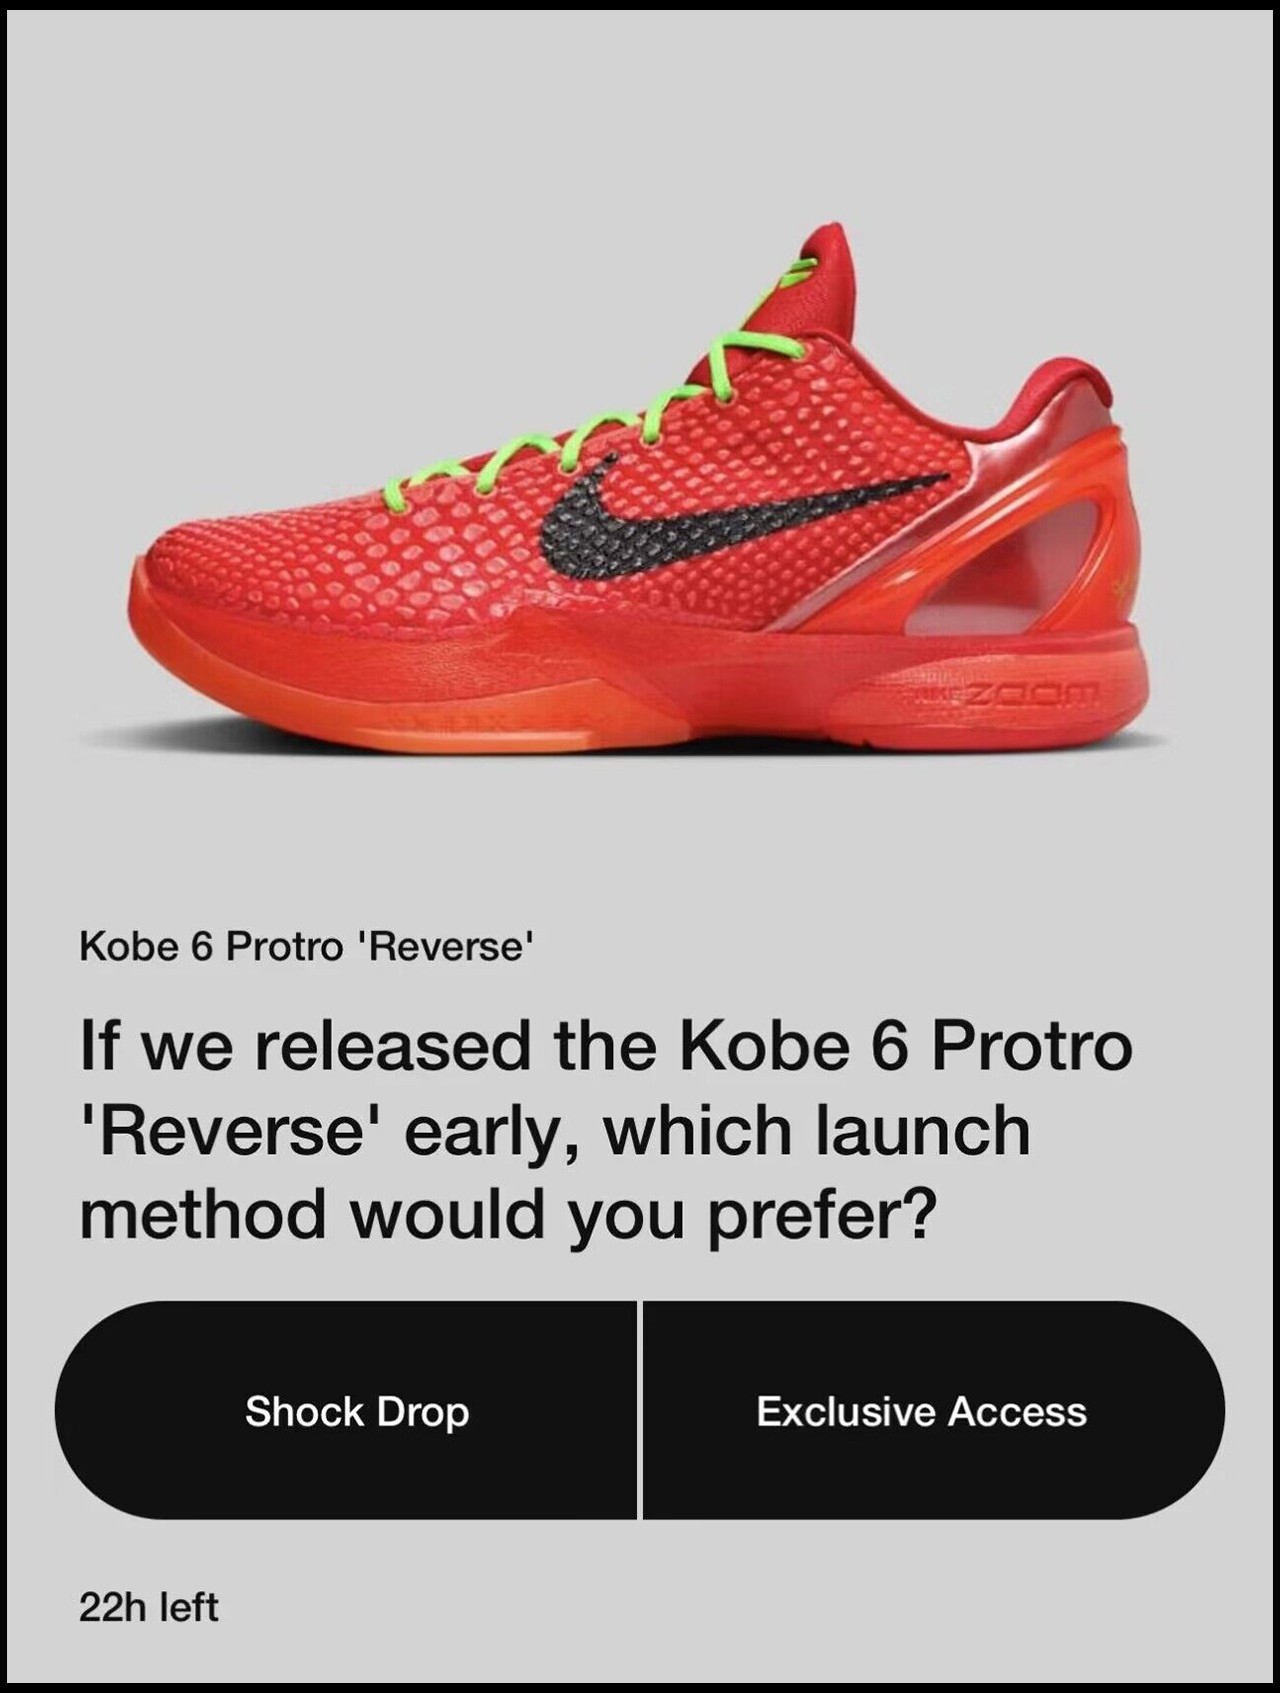 Nike,Kobe 6,Protro,Reverse Gri  突袭还是专属？「反转圣诞」科比 6 有新消息！